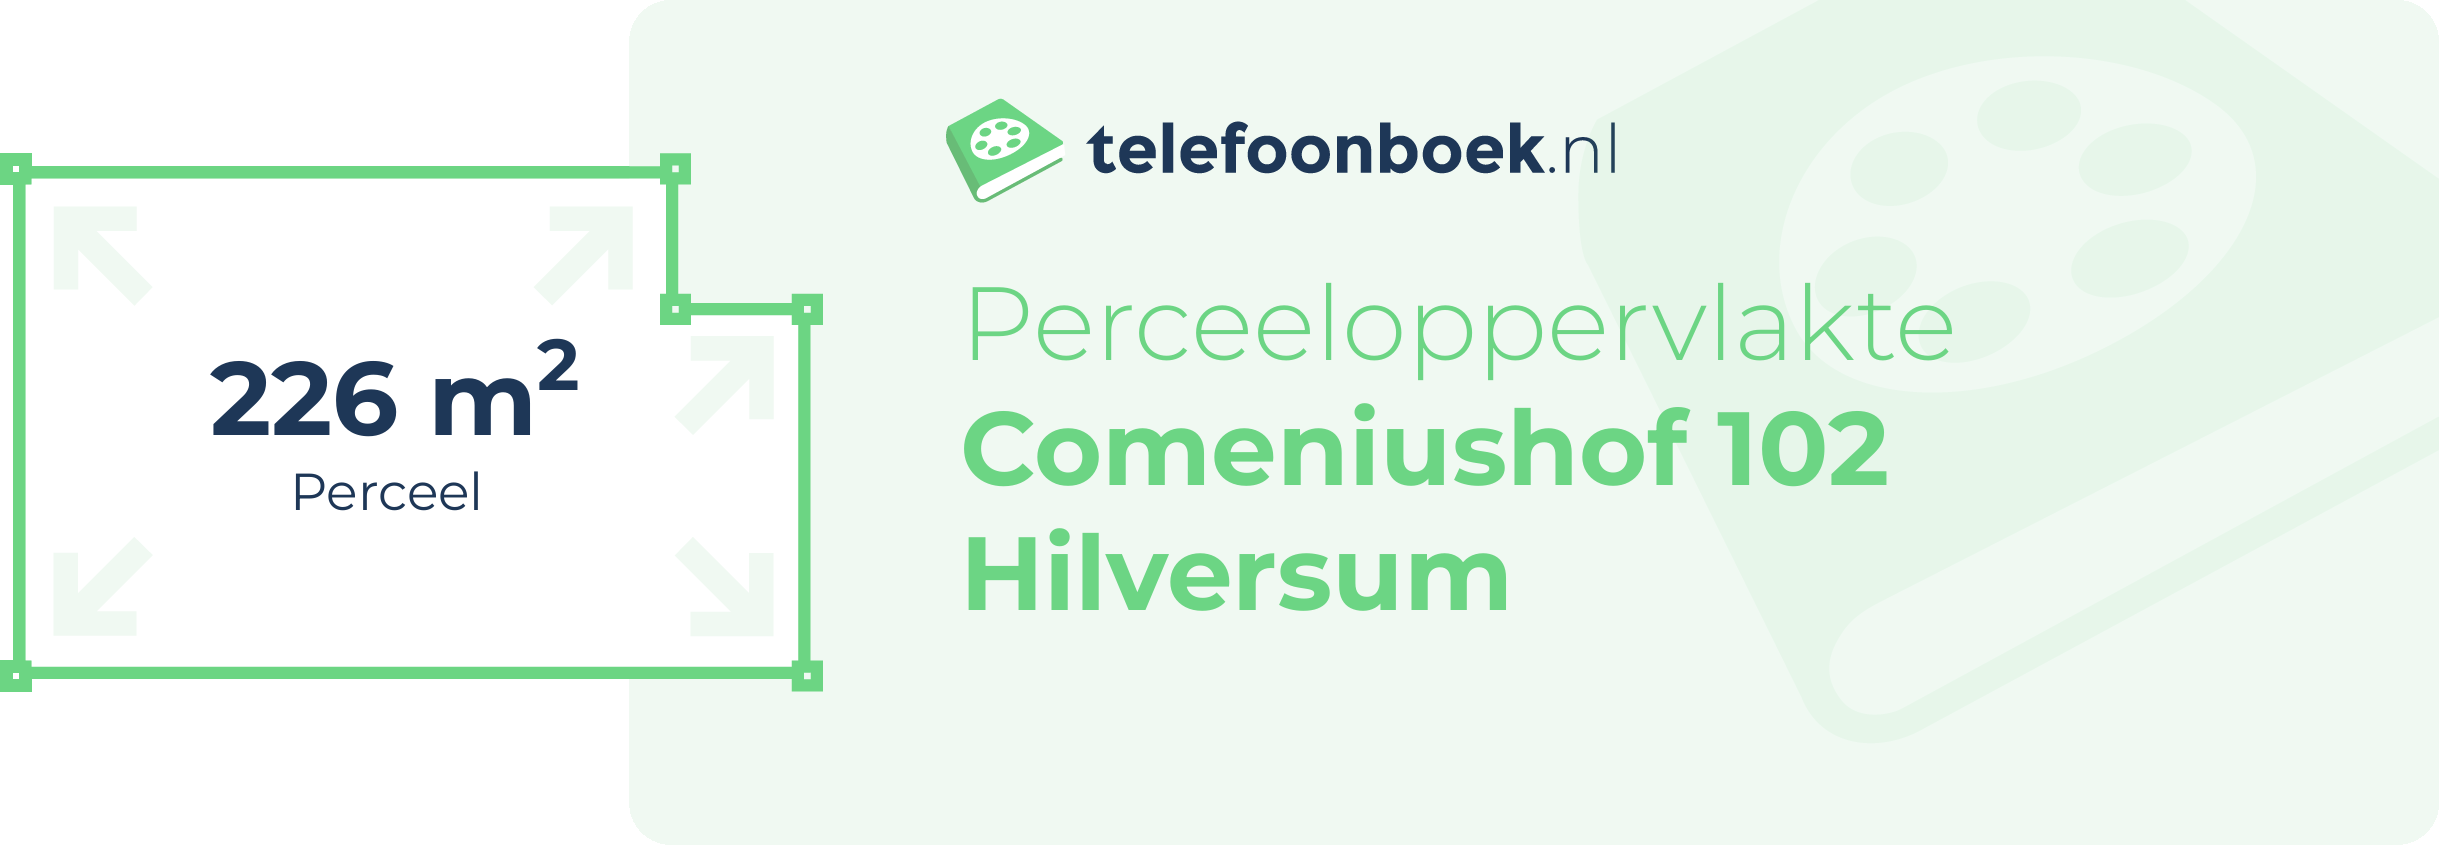 Perceeloppervlakte Comeniushof 102 Hilversum